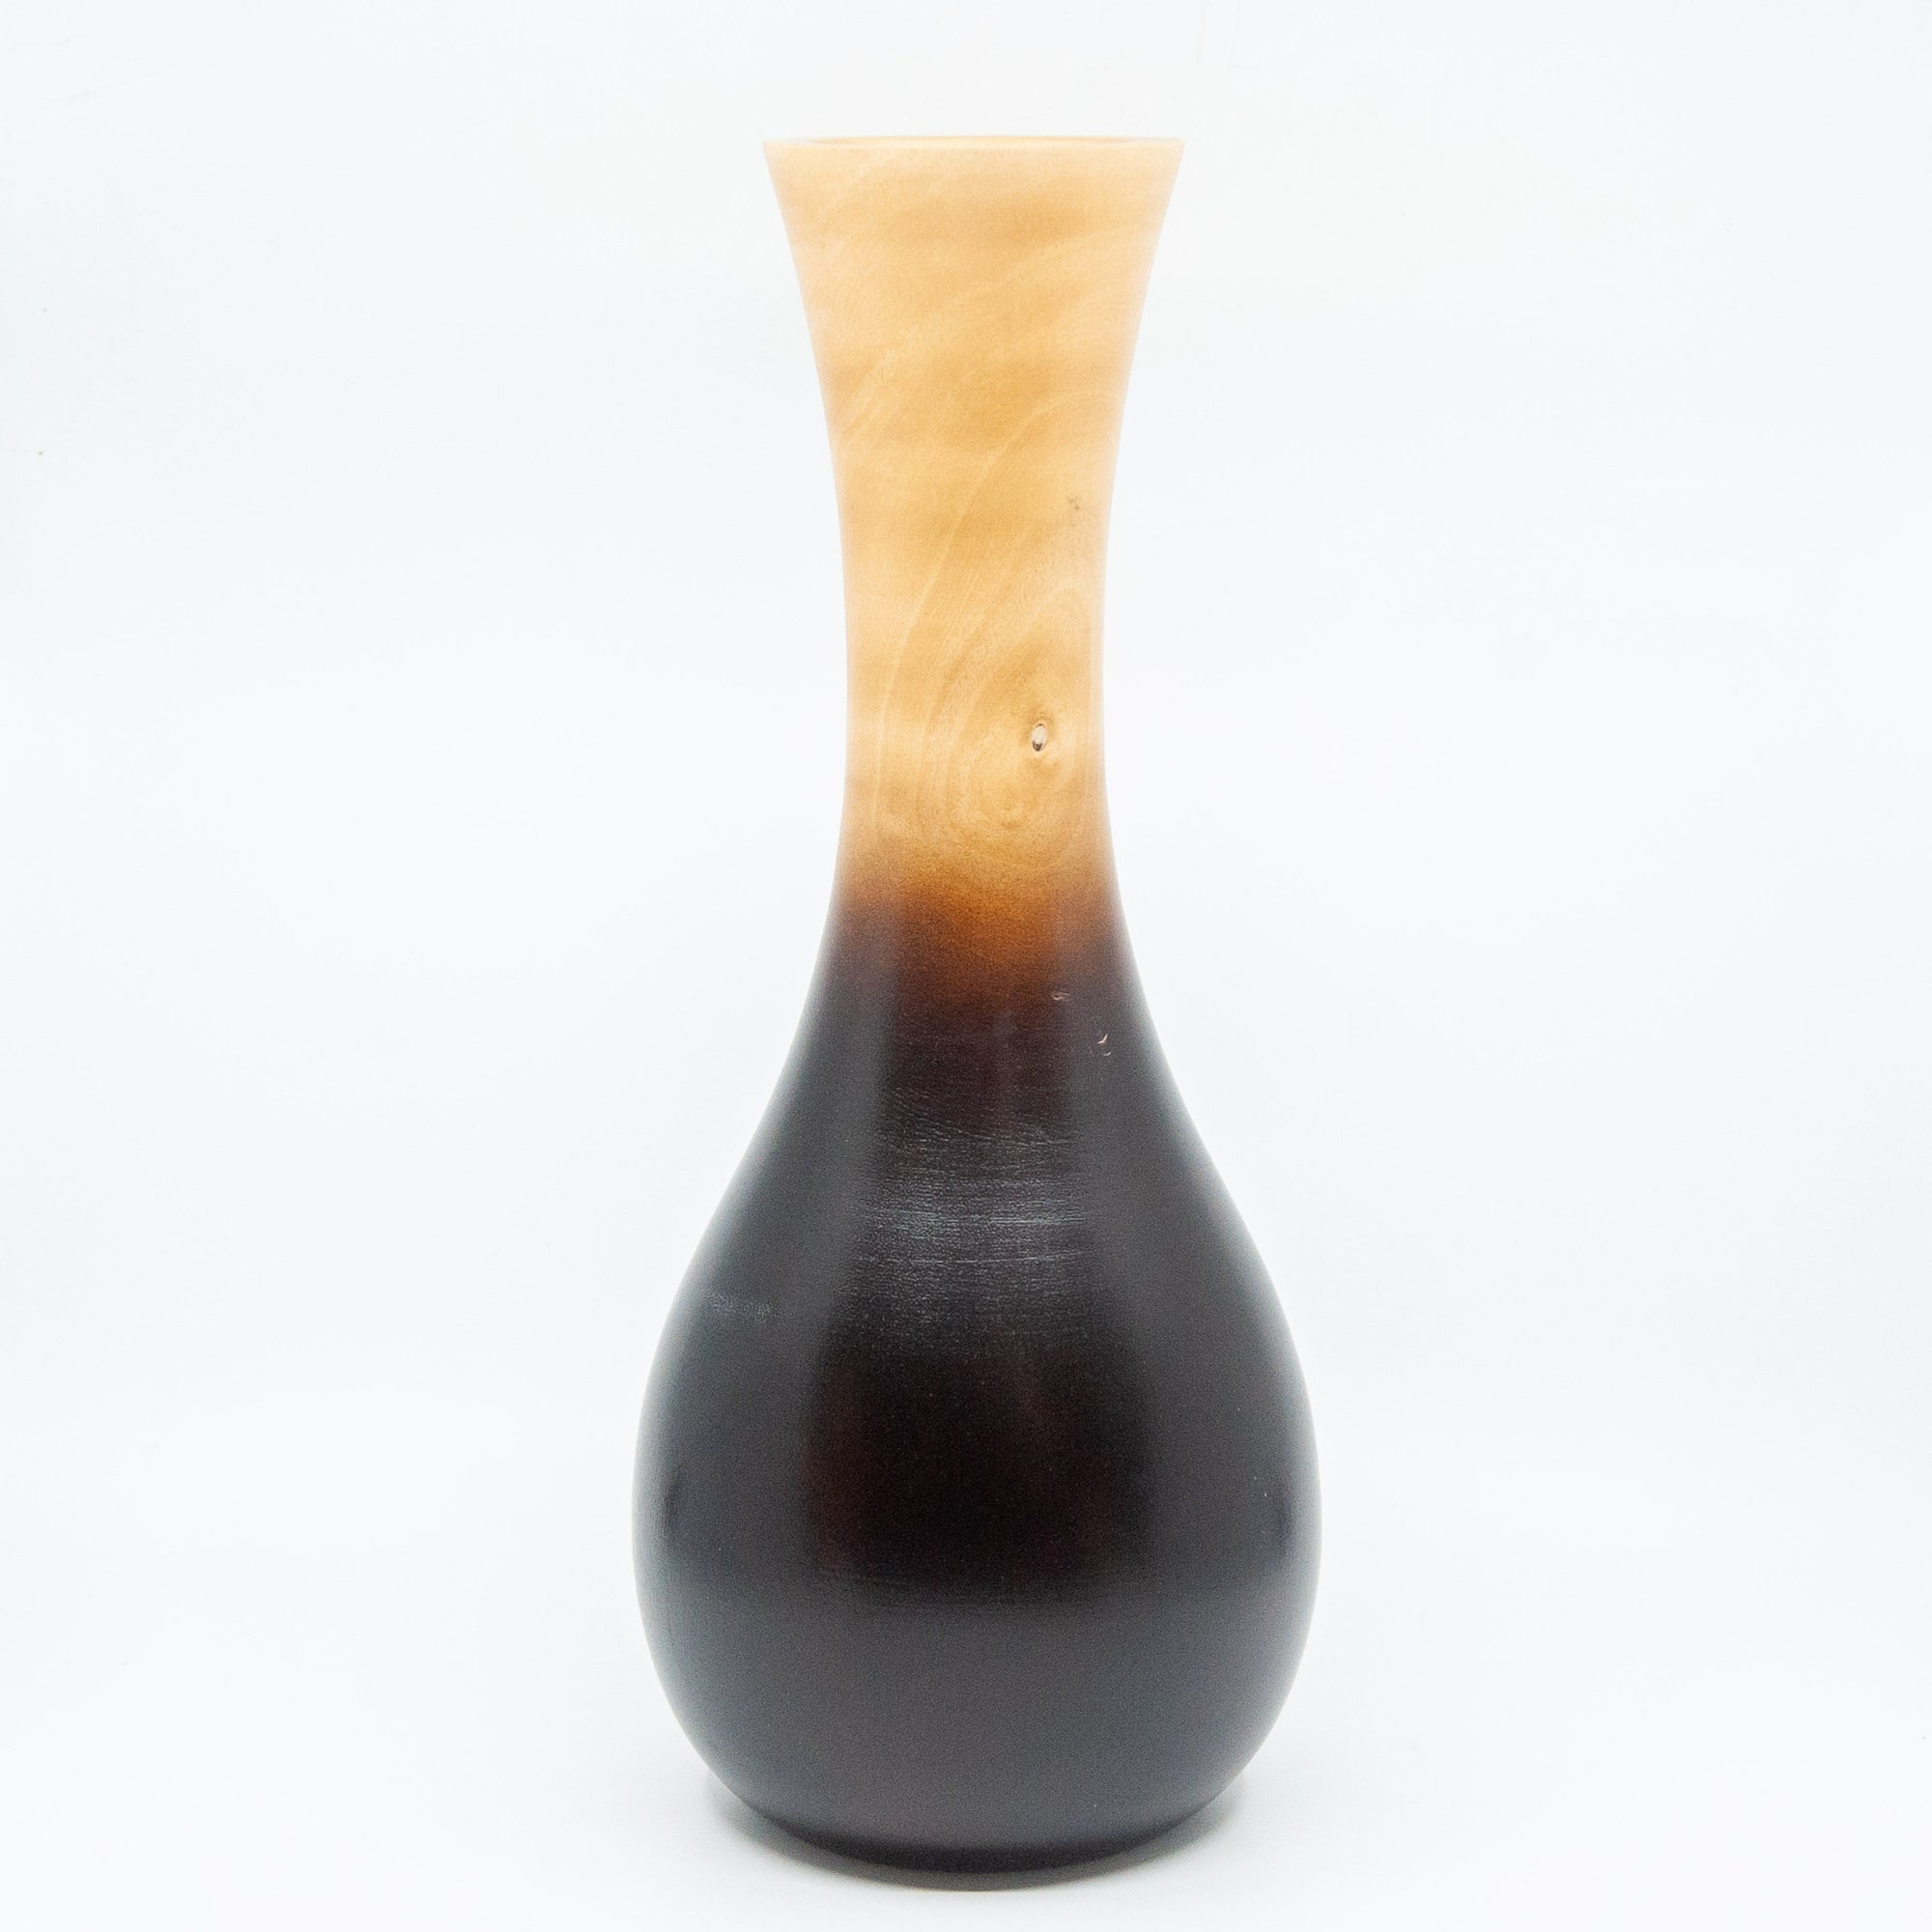 Mango Wood Bulbous Vase - 14" (Ombre)